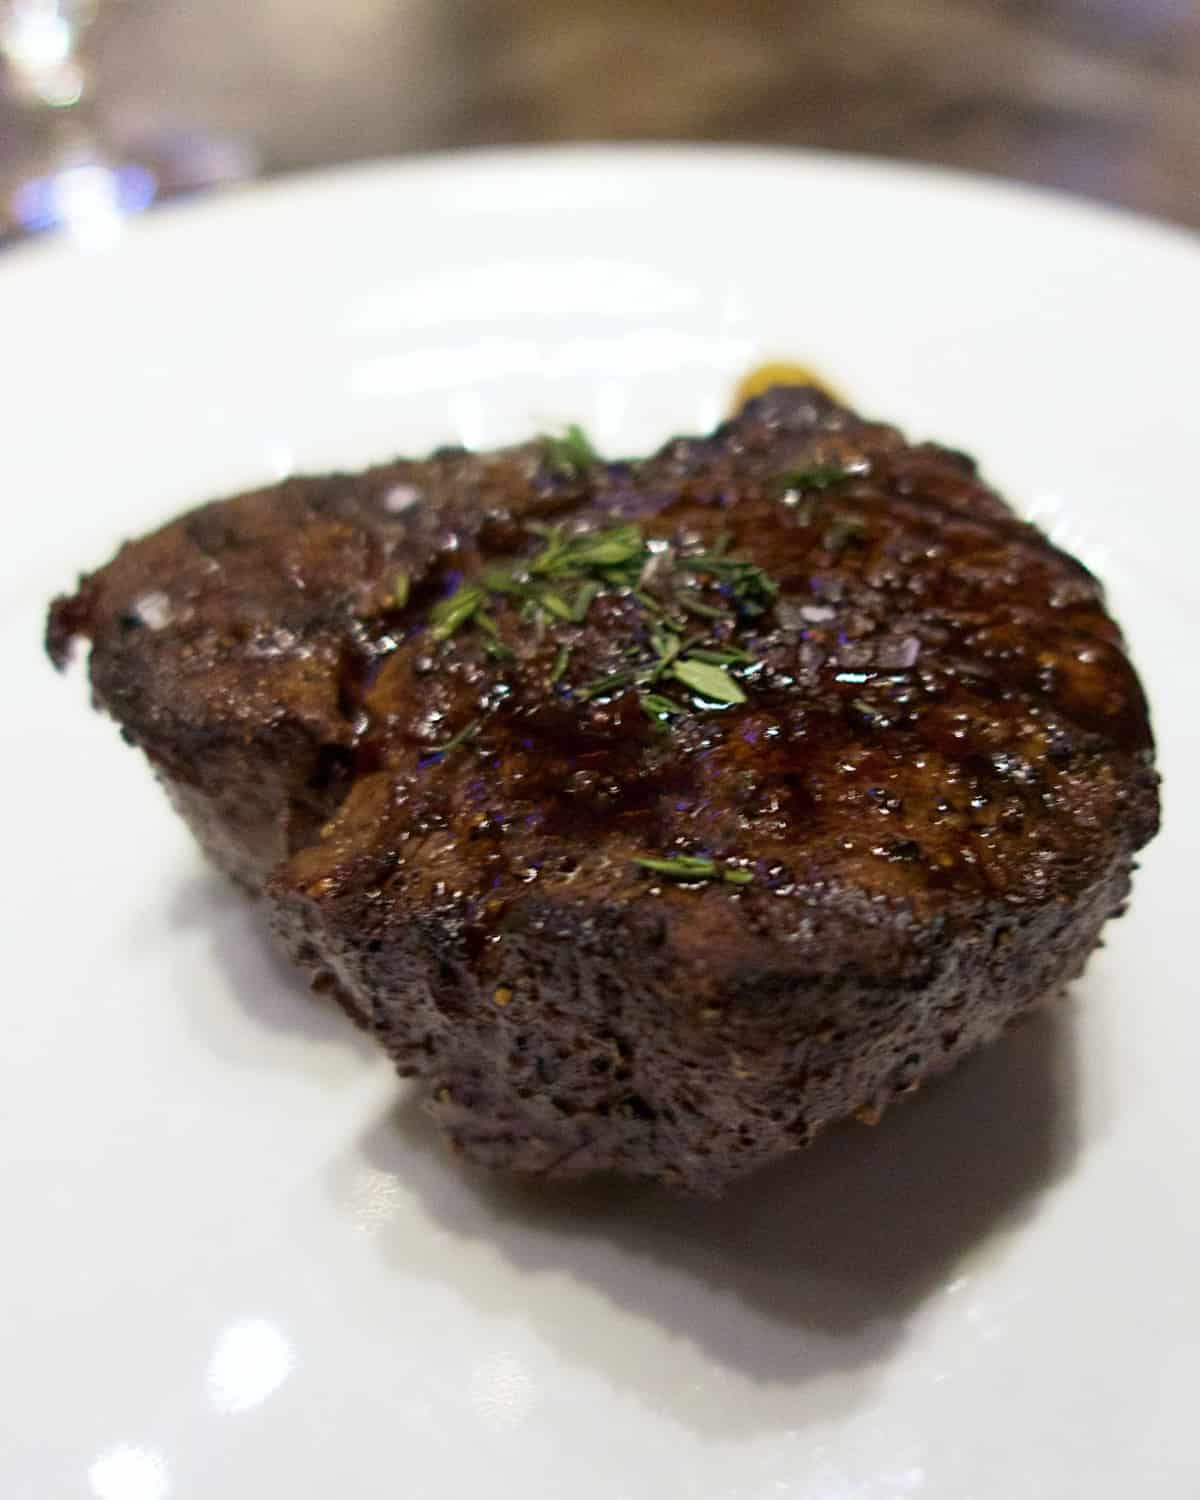 Tom Colicchio's Heritage Steak - filet